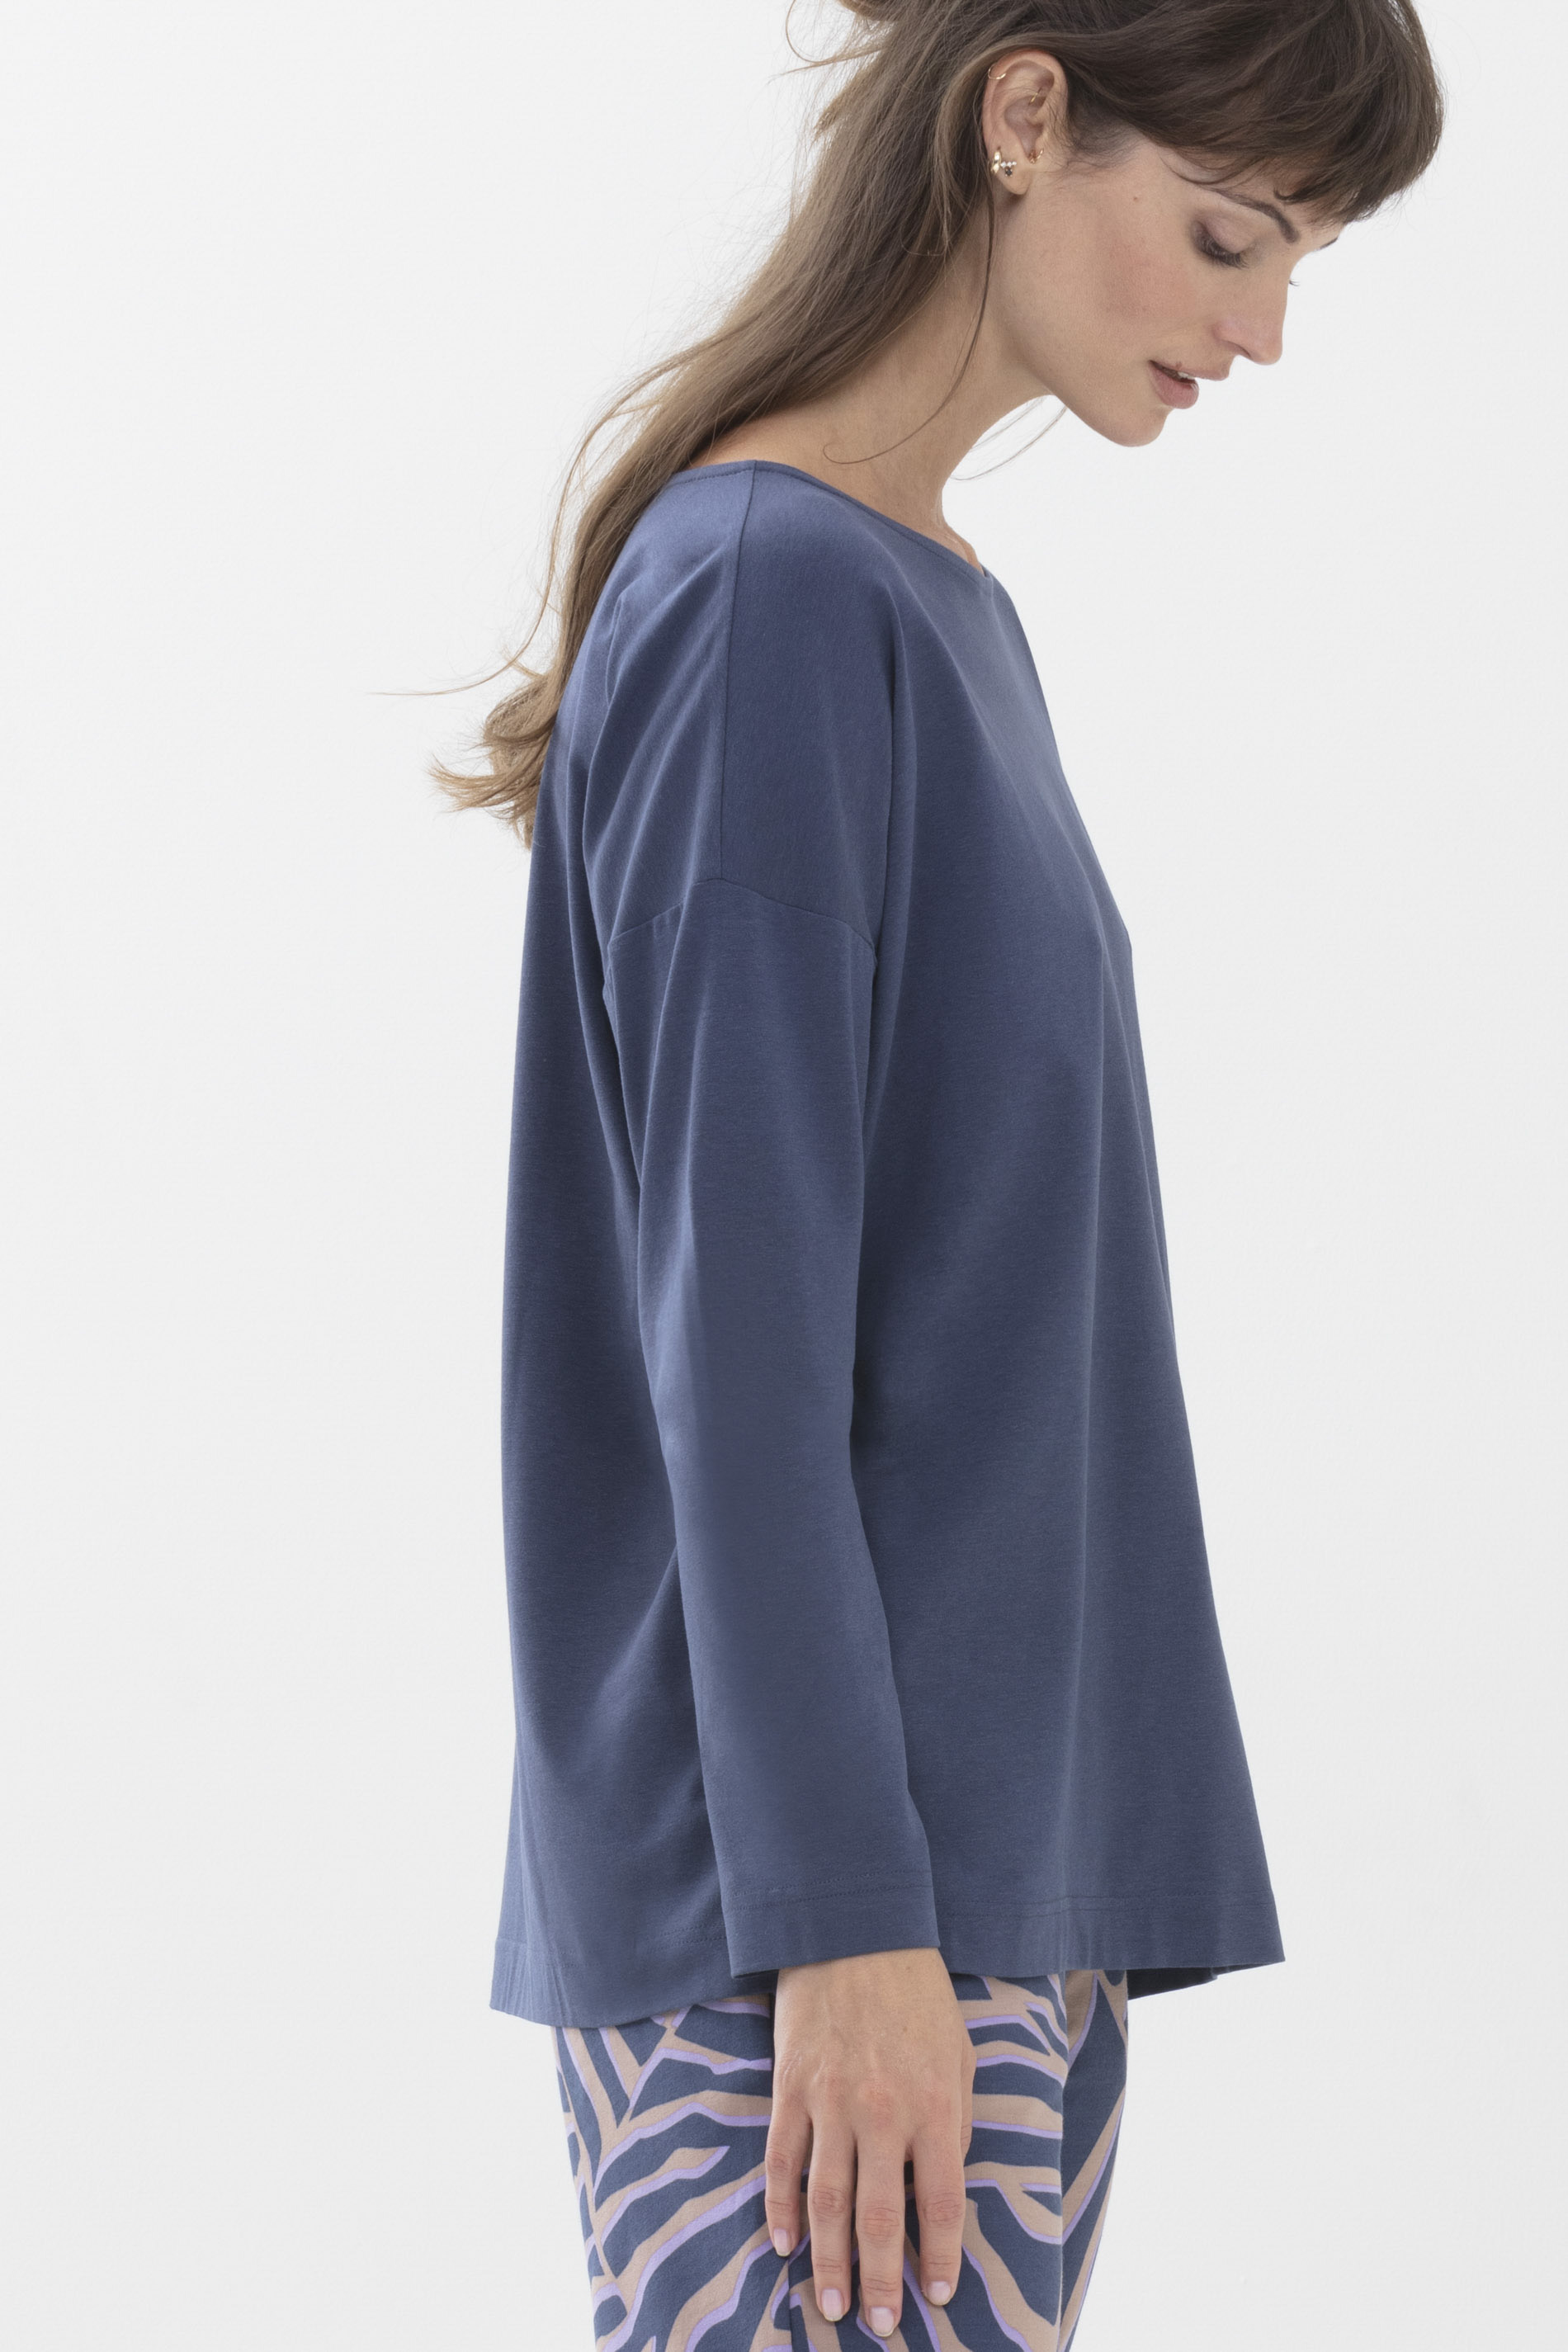 Long-sleeved shirt New Blue Serie Aya Detail View 02 | mey®